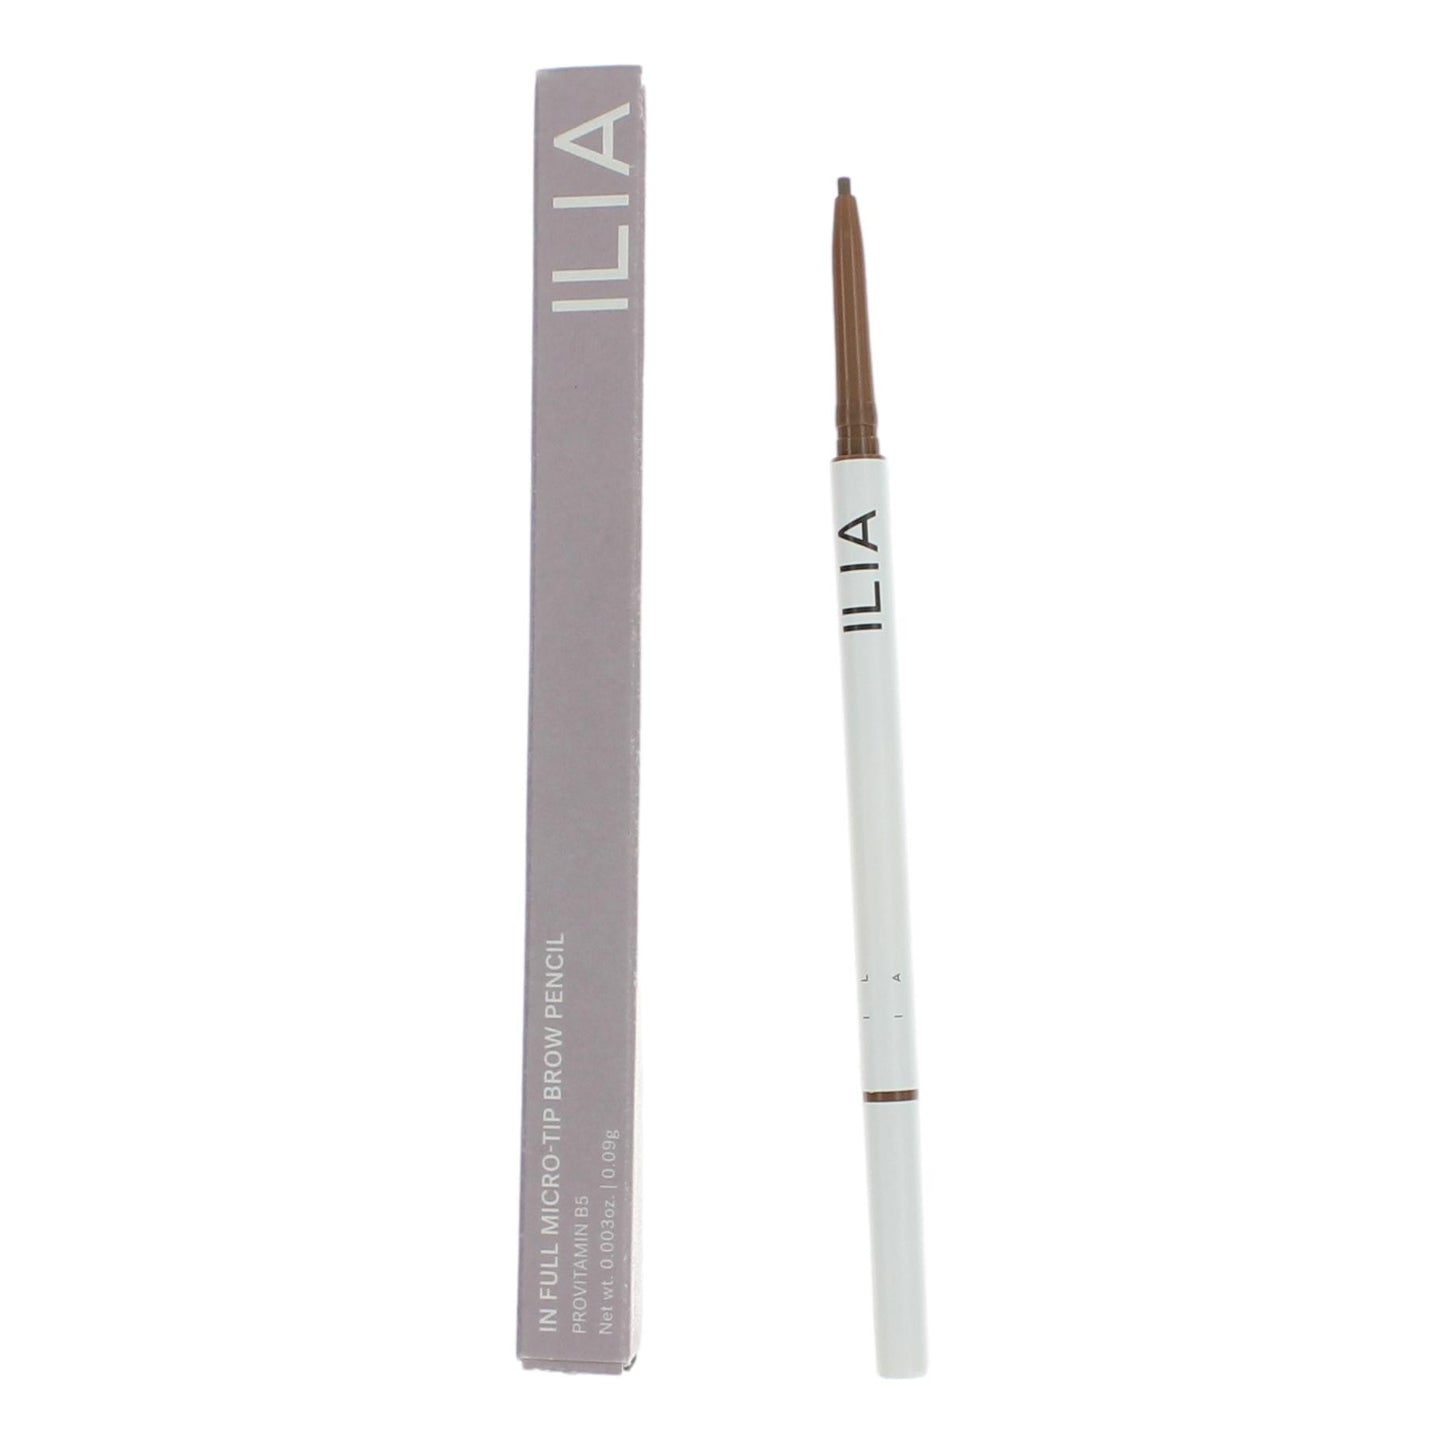 ILIA In Full Micro-Tip Brow Pencil by ILIA, .003oz Eyebrow Pencil - Blonde - Blonde